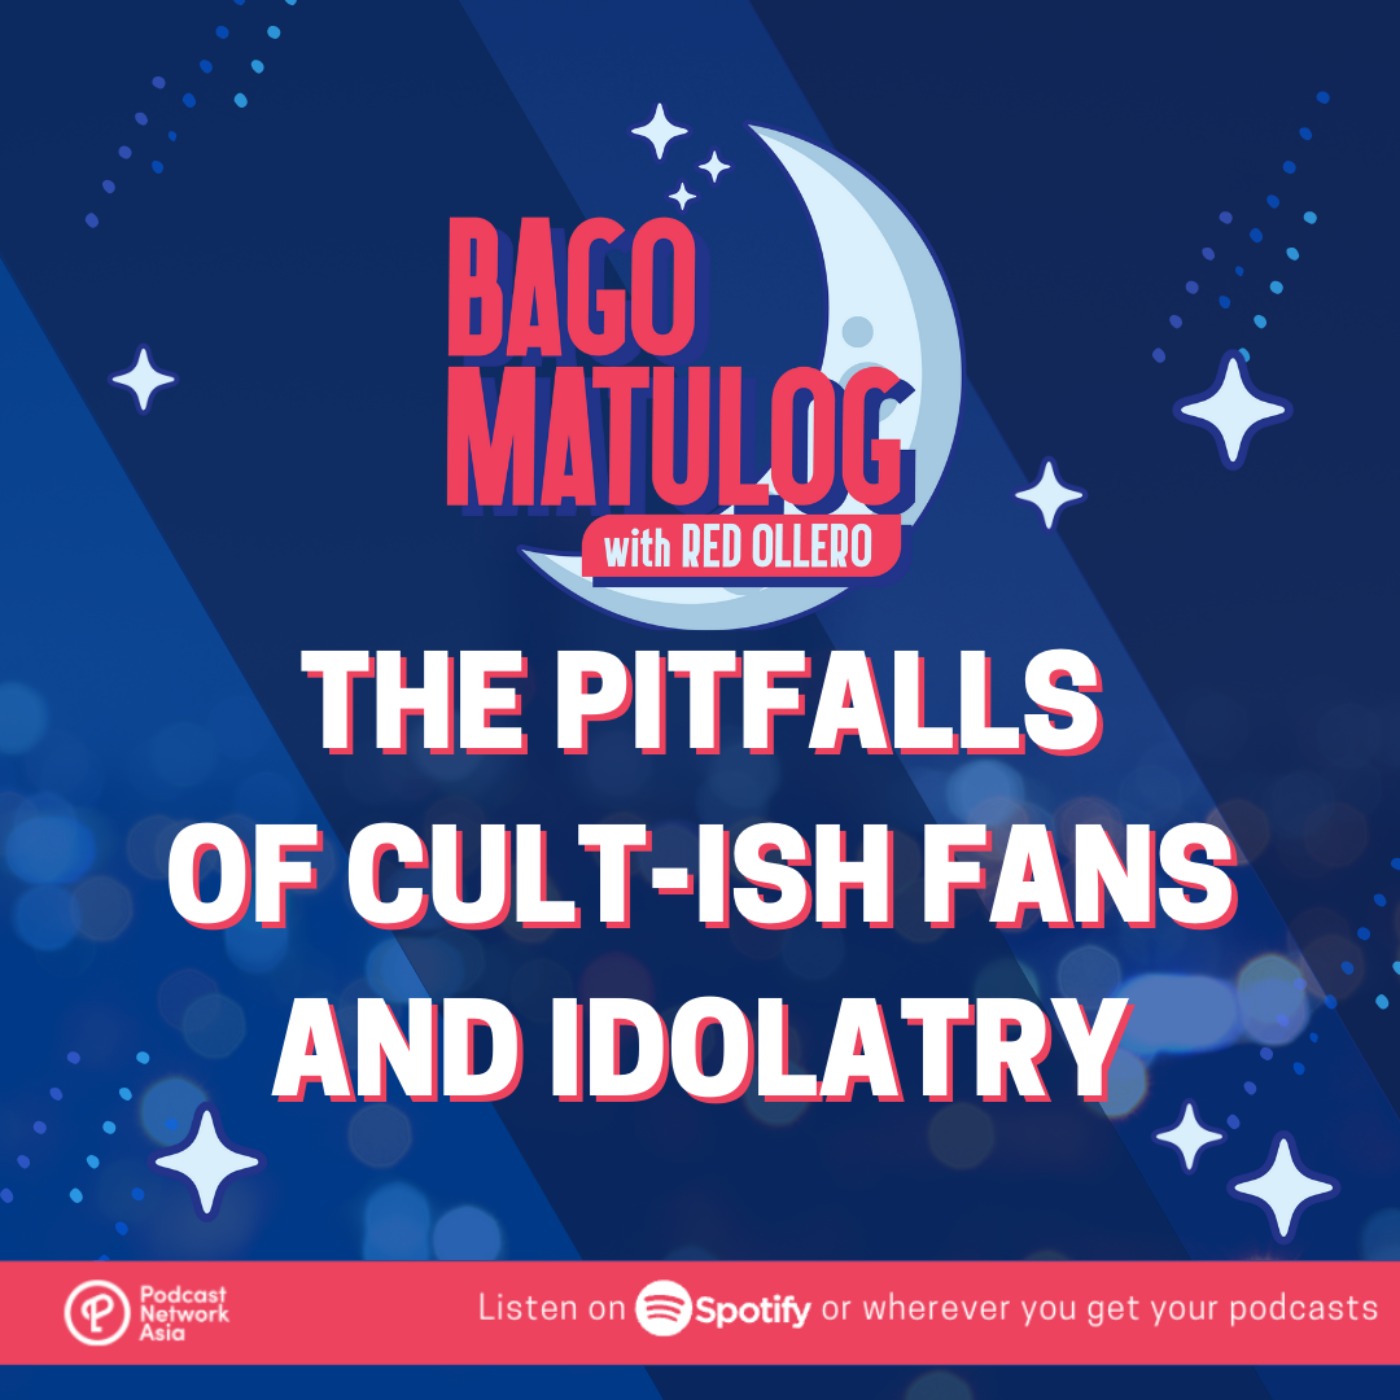 The Pitfalls of Cult-ish fans and Idolatry